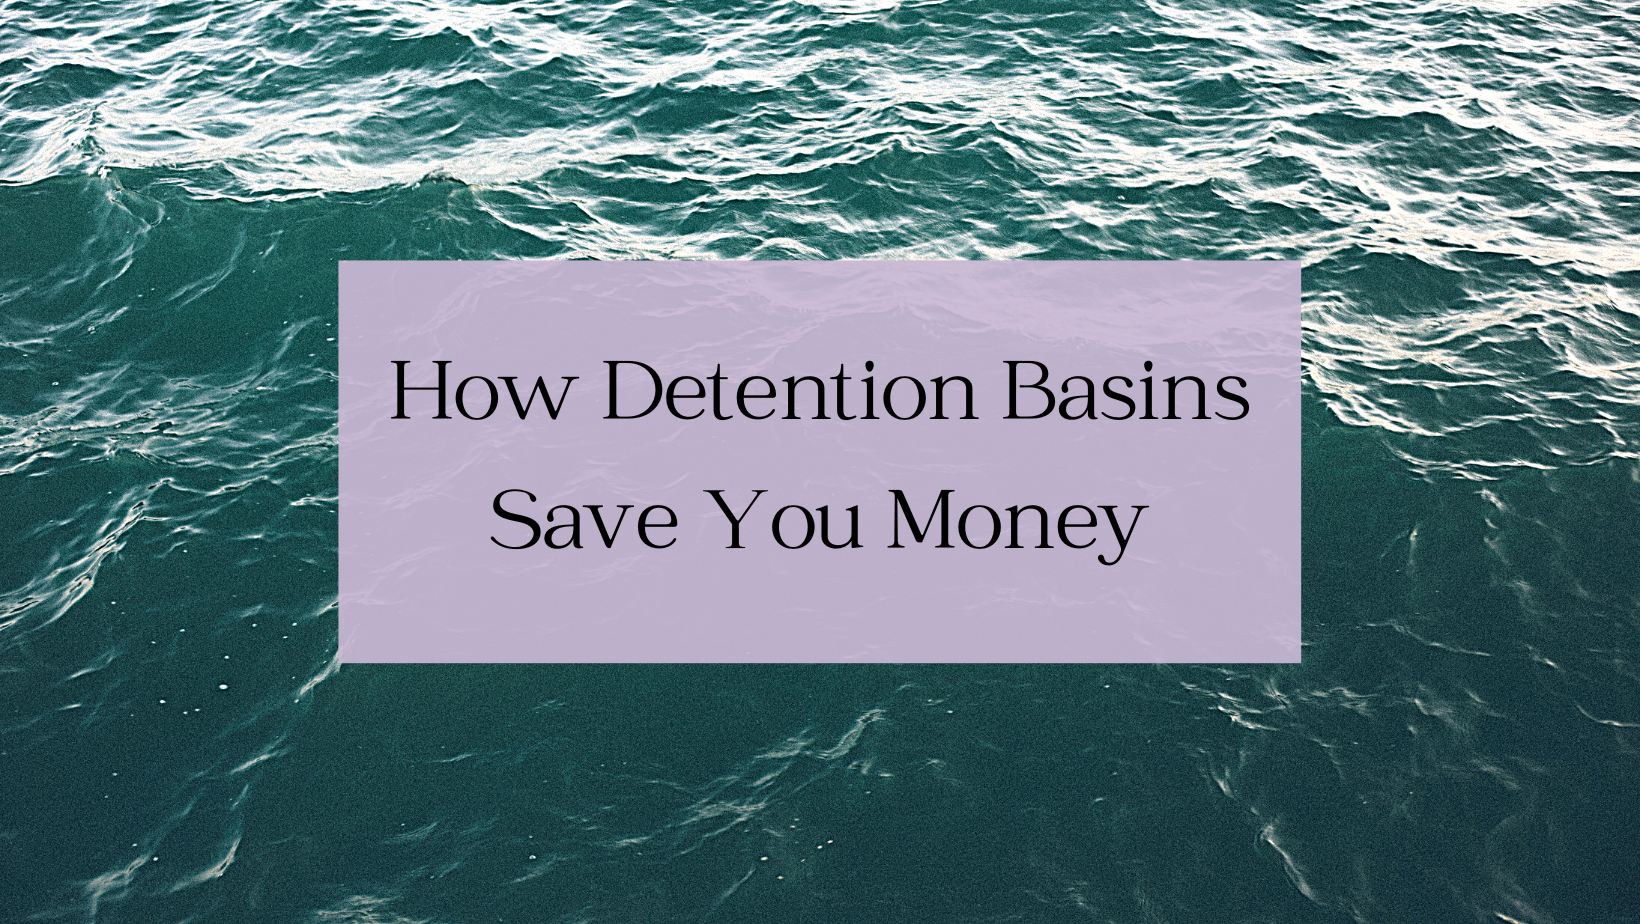 How Detention Basins Save You Money